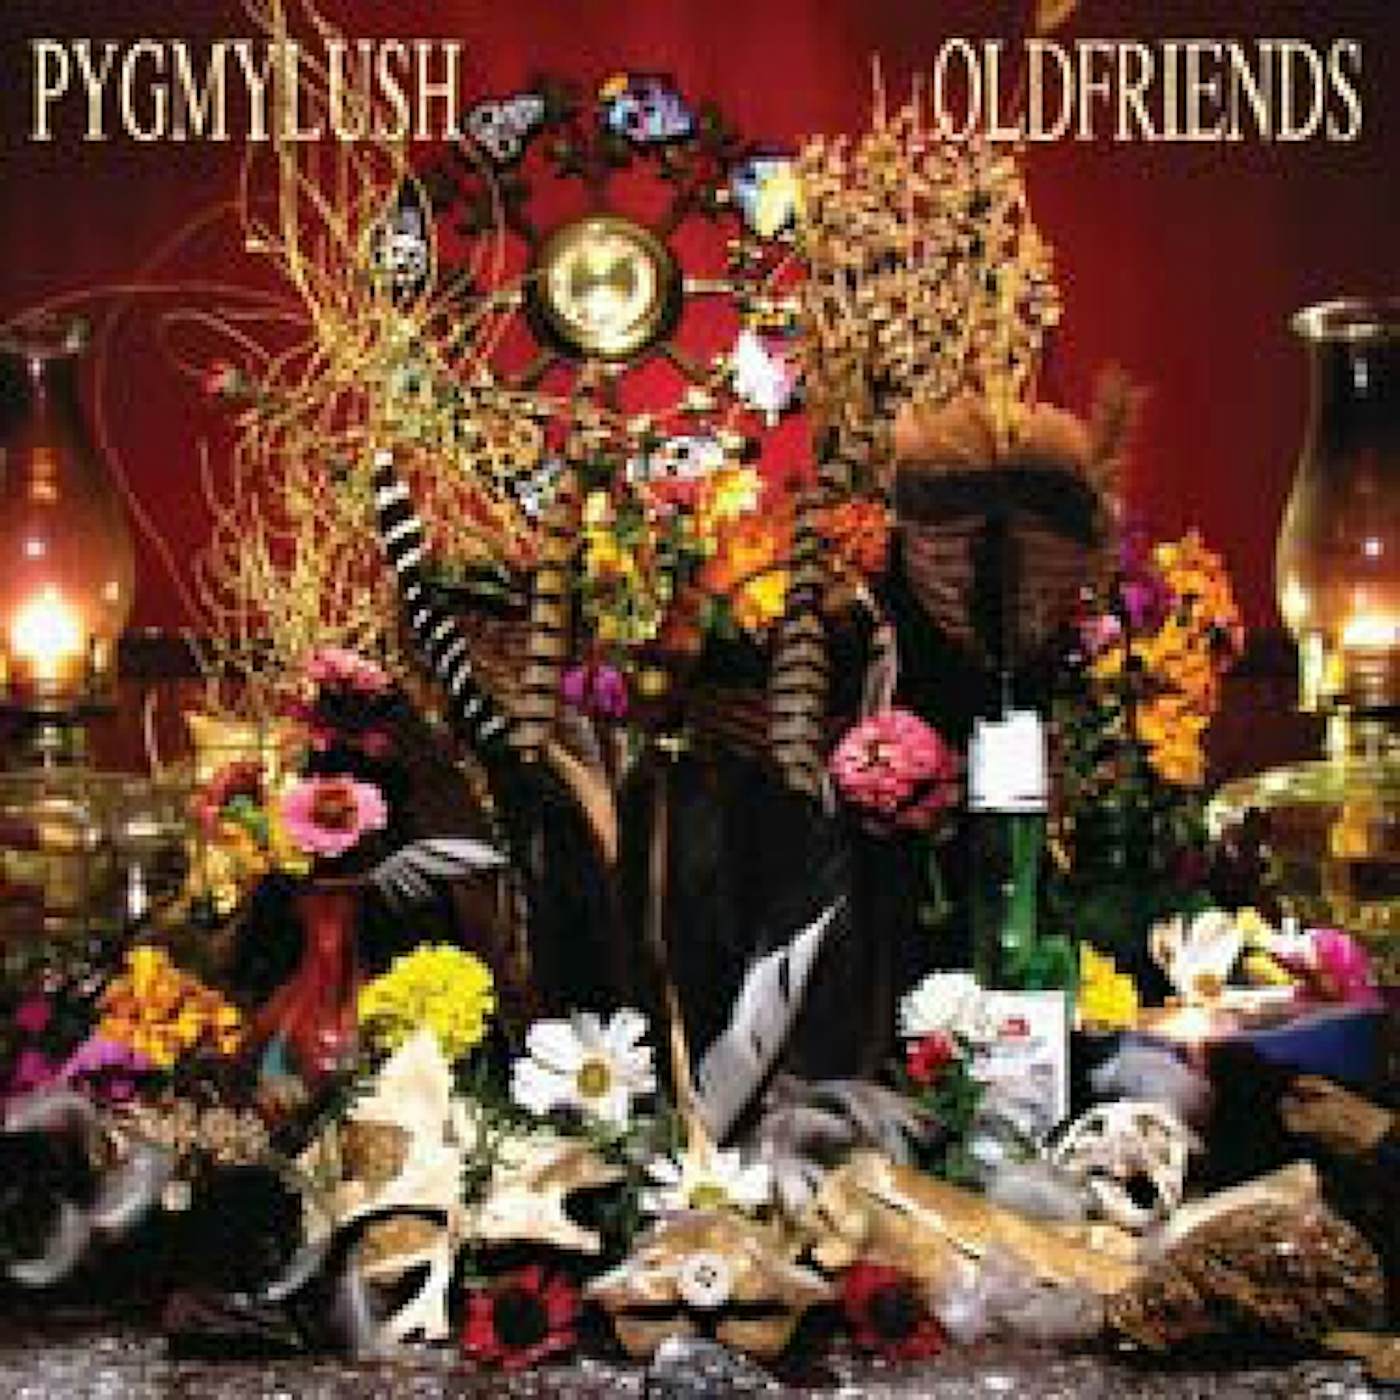 Pygmy Lush OLD FRIENDS CD